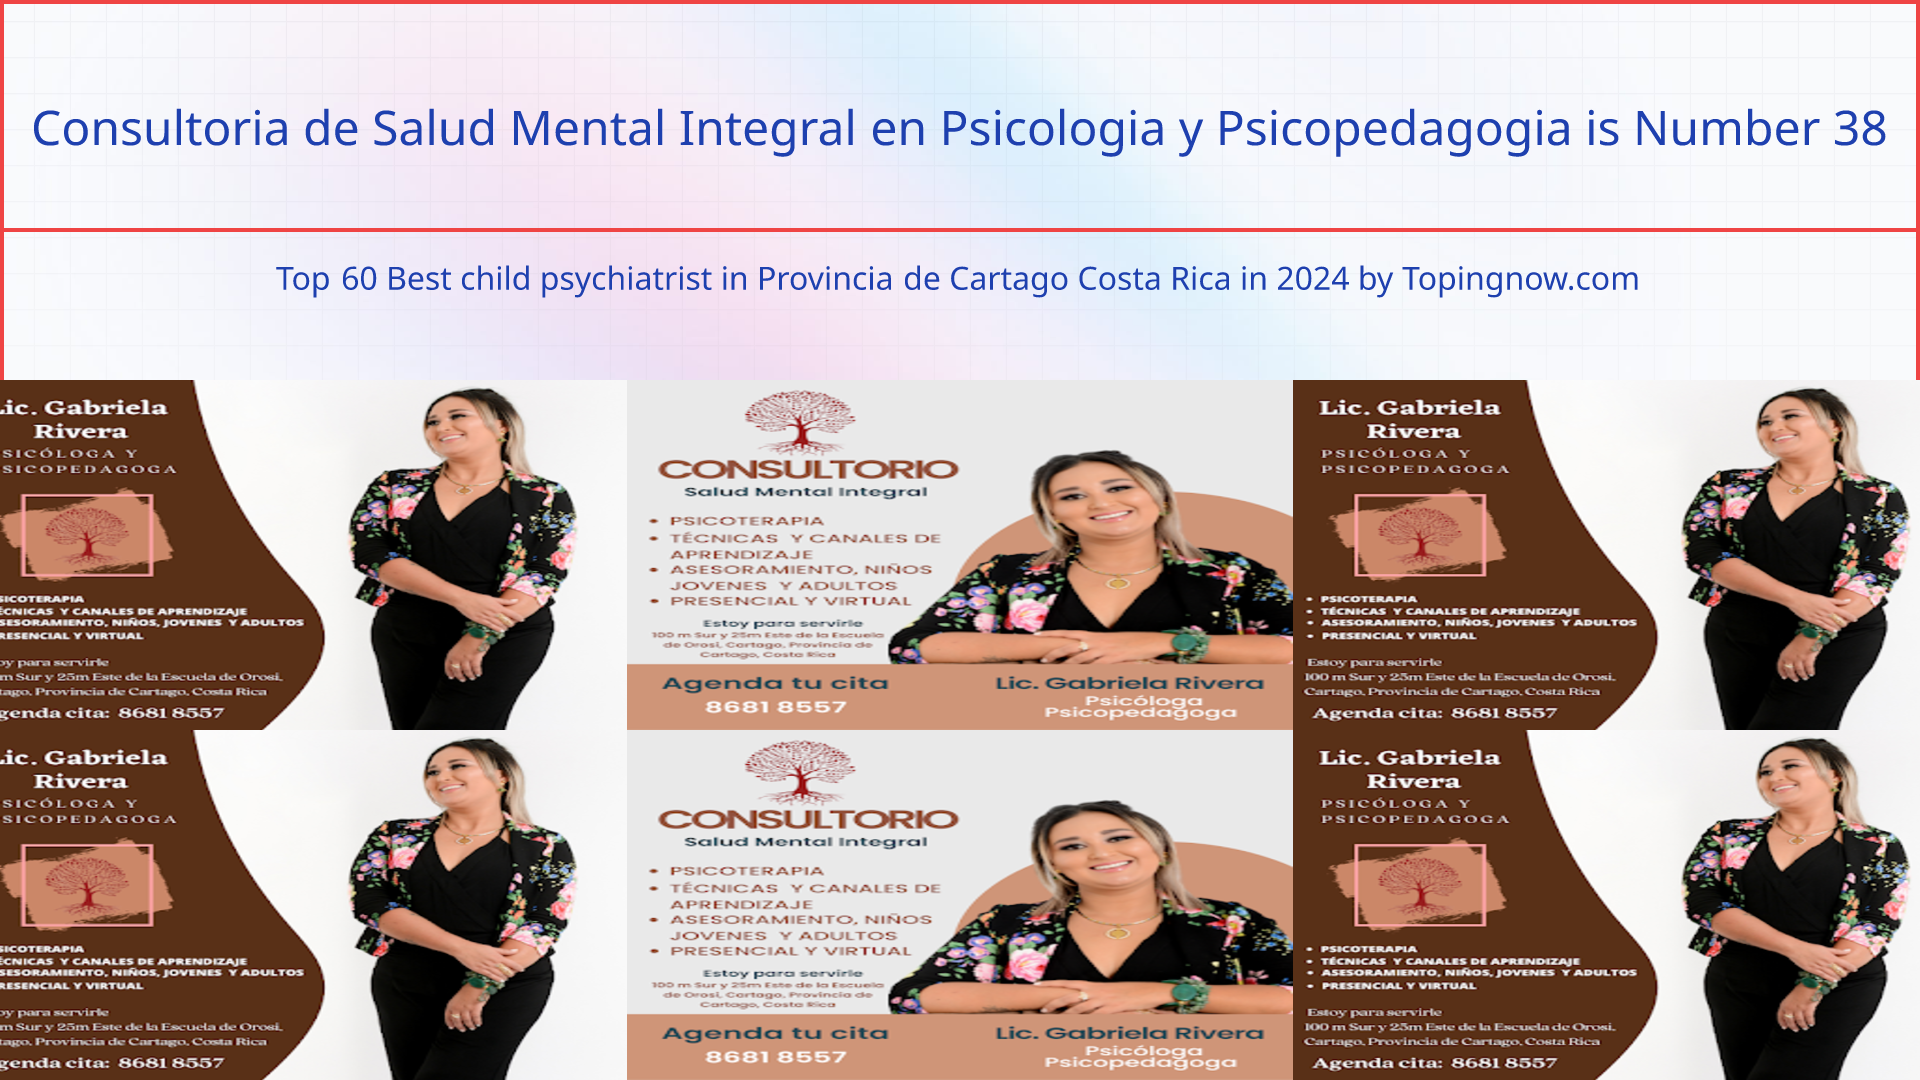 Consultoria de Salud Mental Integral en Psicologia y Psicopedagogia: Top 60 Best child psychiatrist in Provincia de Cartago Costa Rica in 2024